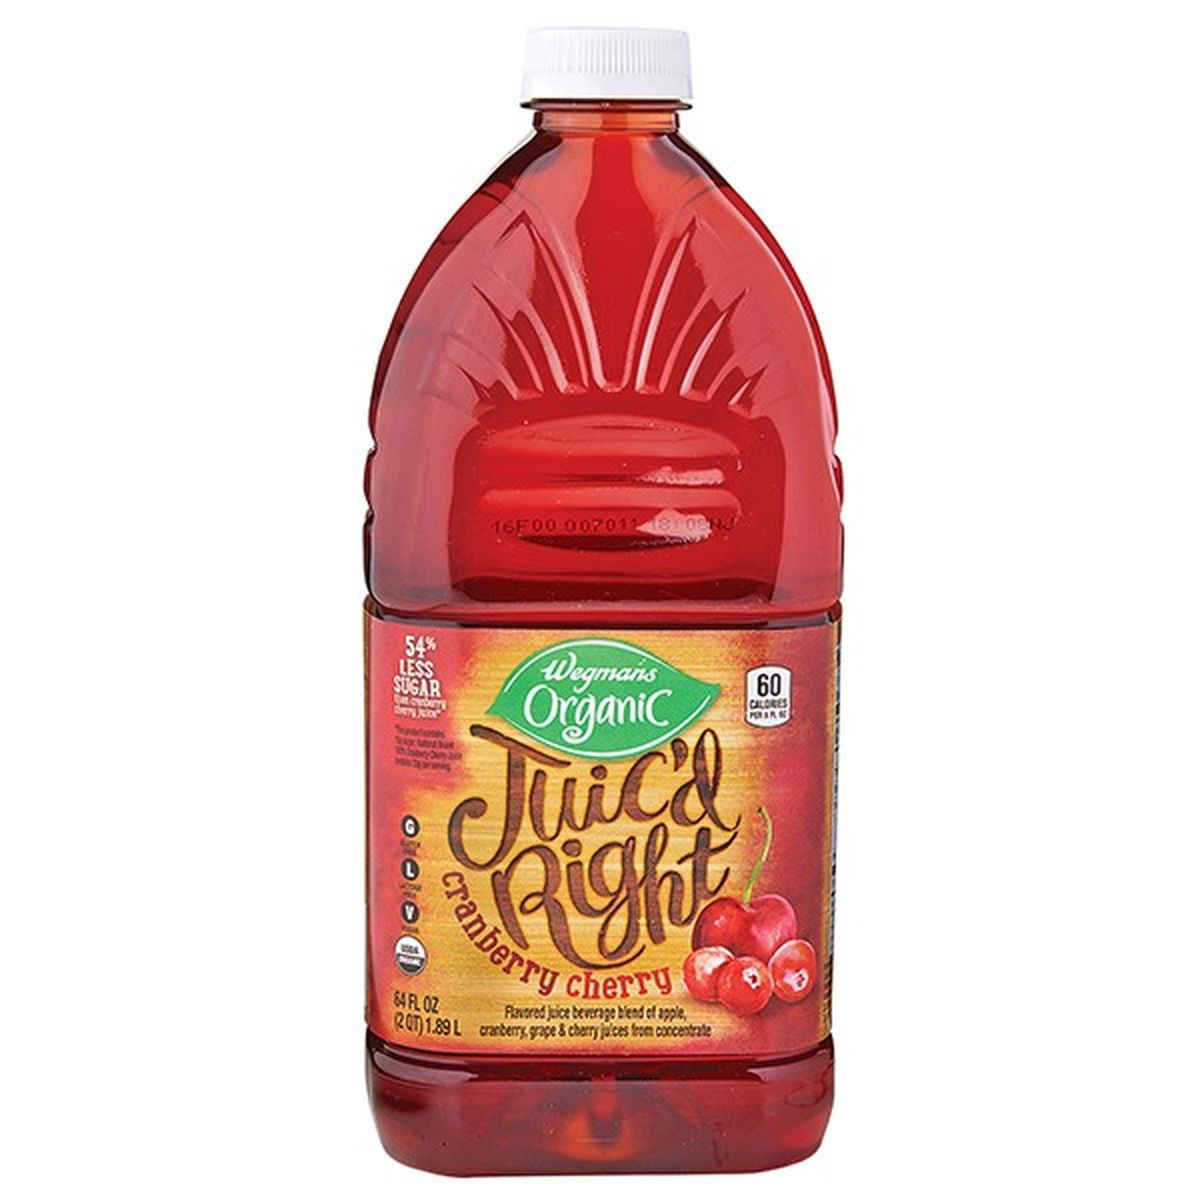 Calories in Wegmans Organic Juic'd Right, Cranberry Cherry